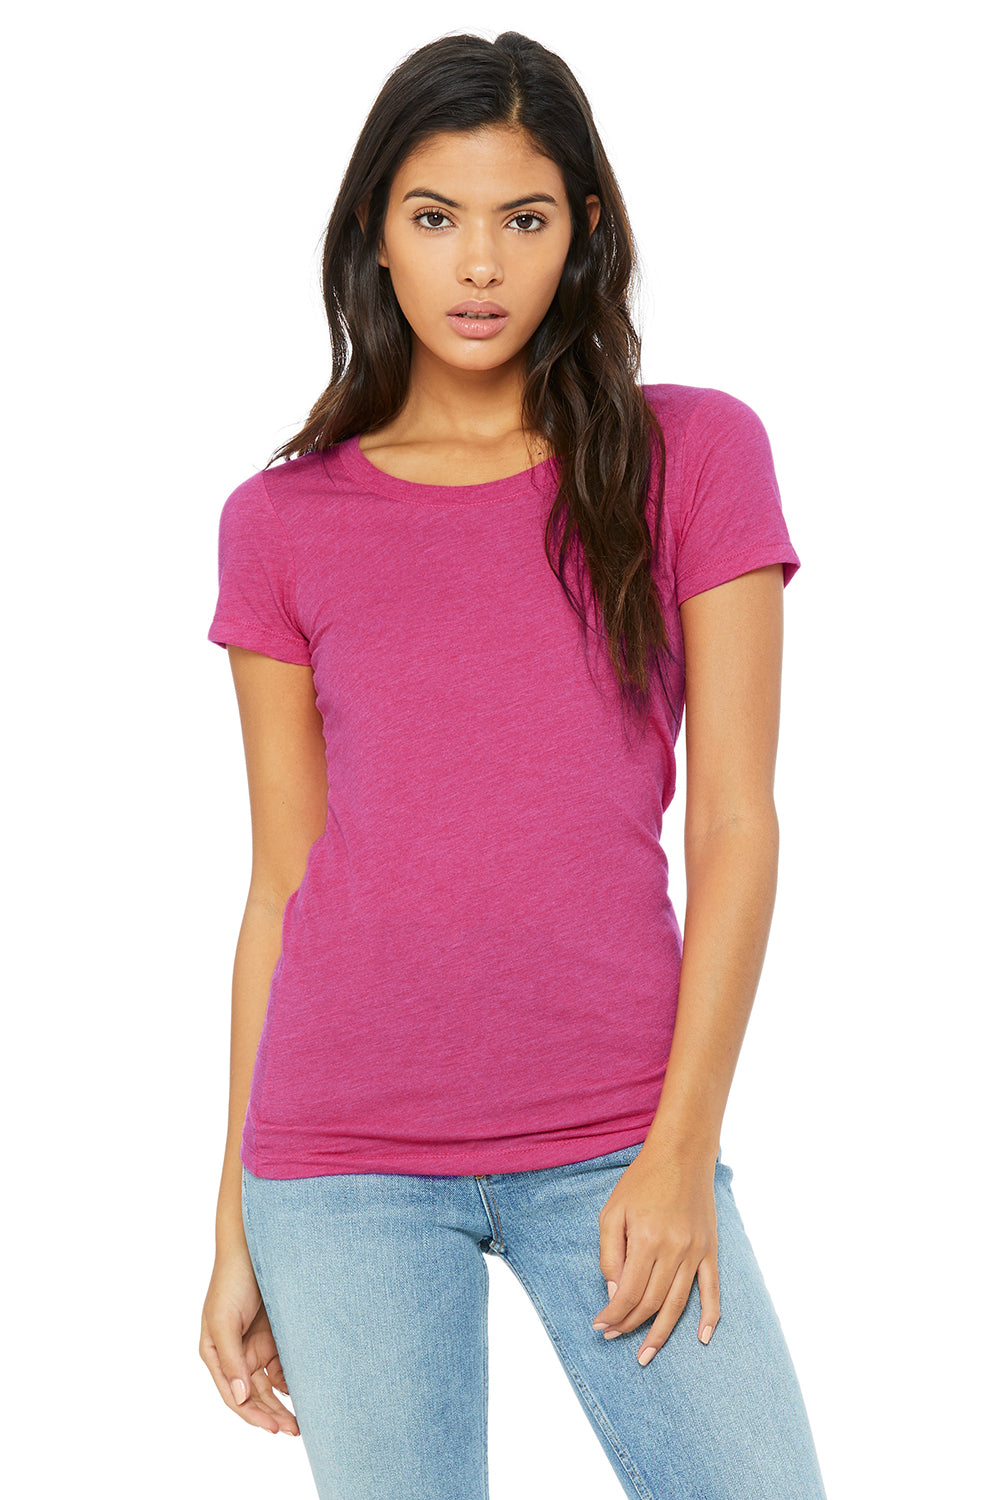 Bella + Canvas B8413 Womens Short Sleeve Crewneck T-Shirt Berry Pink Front